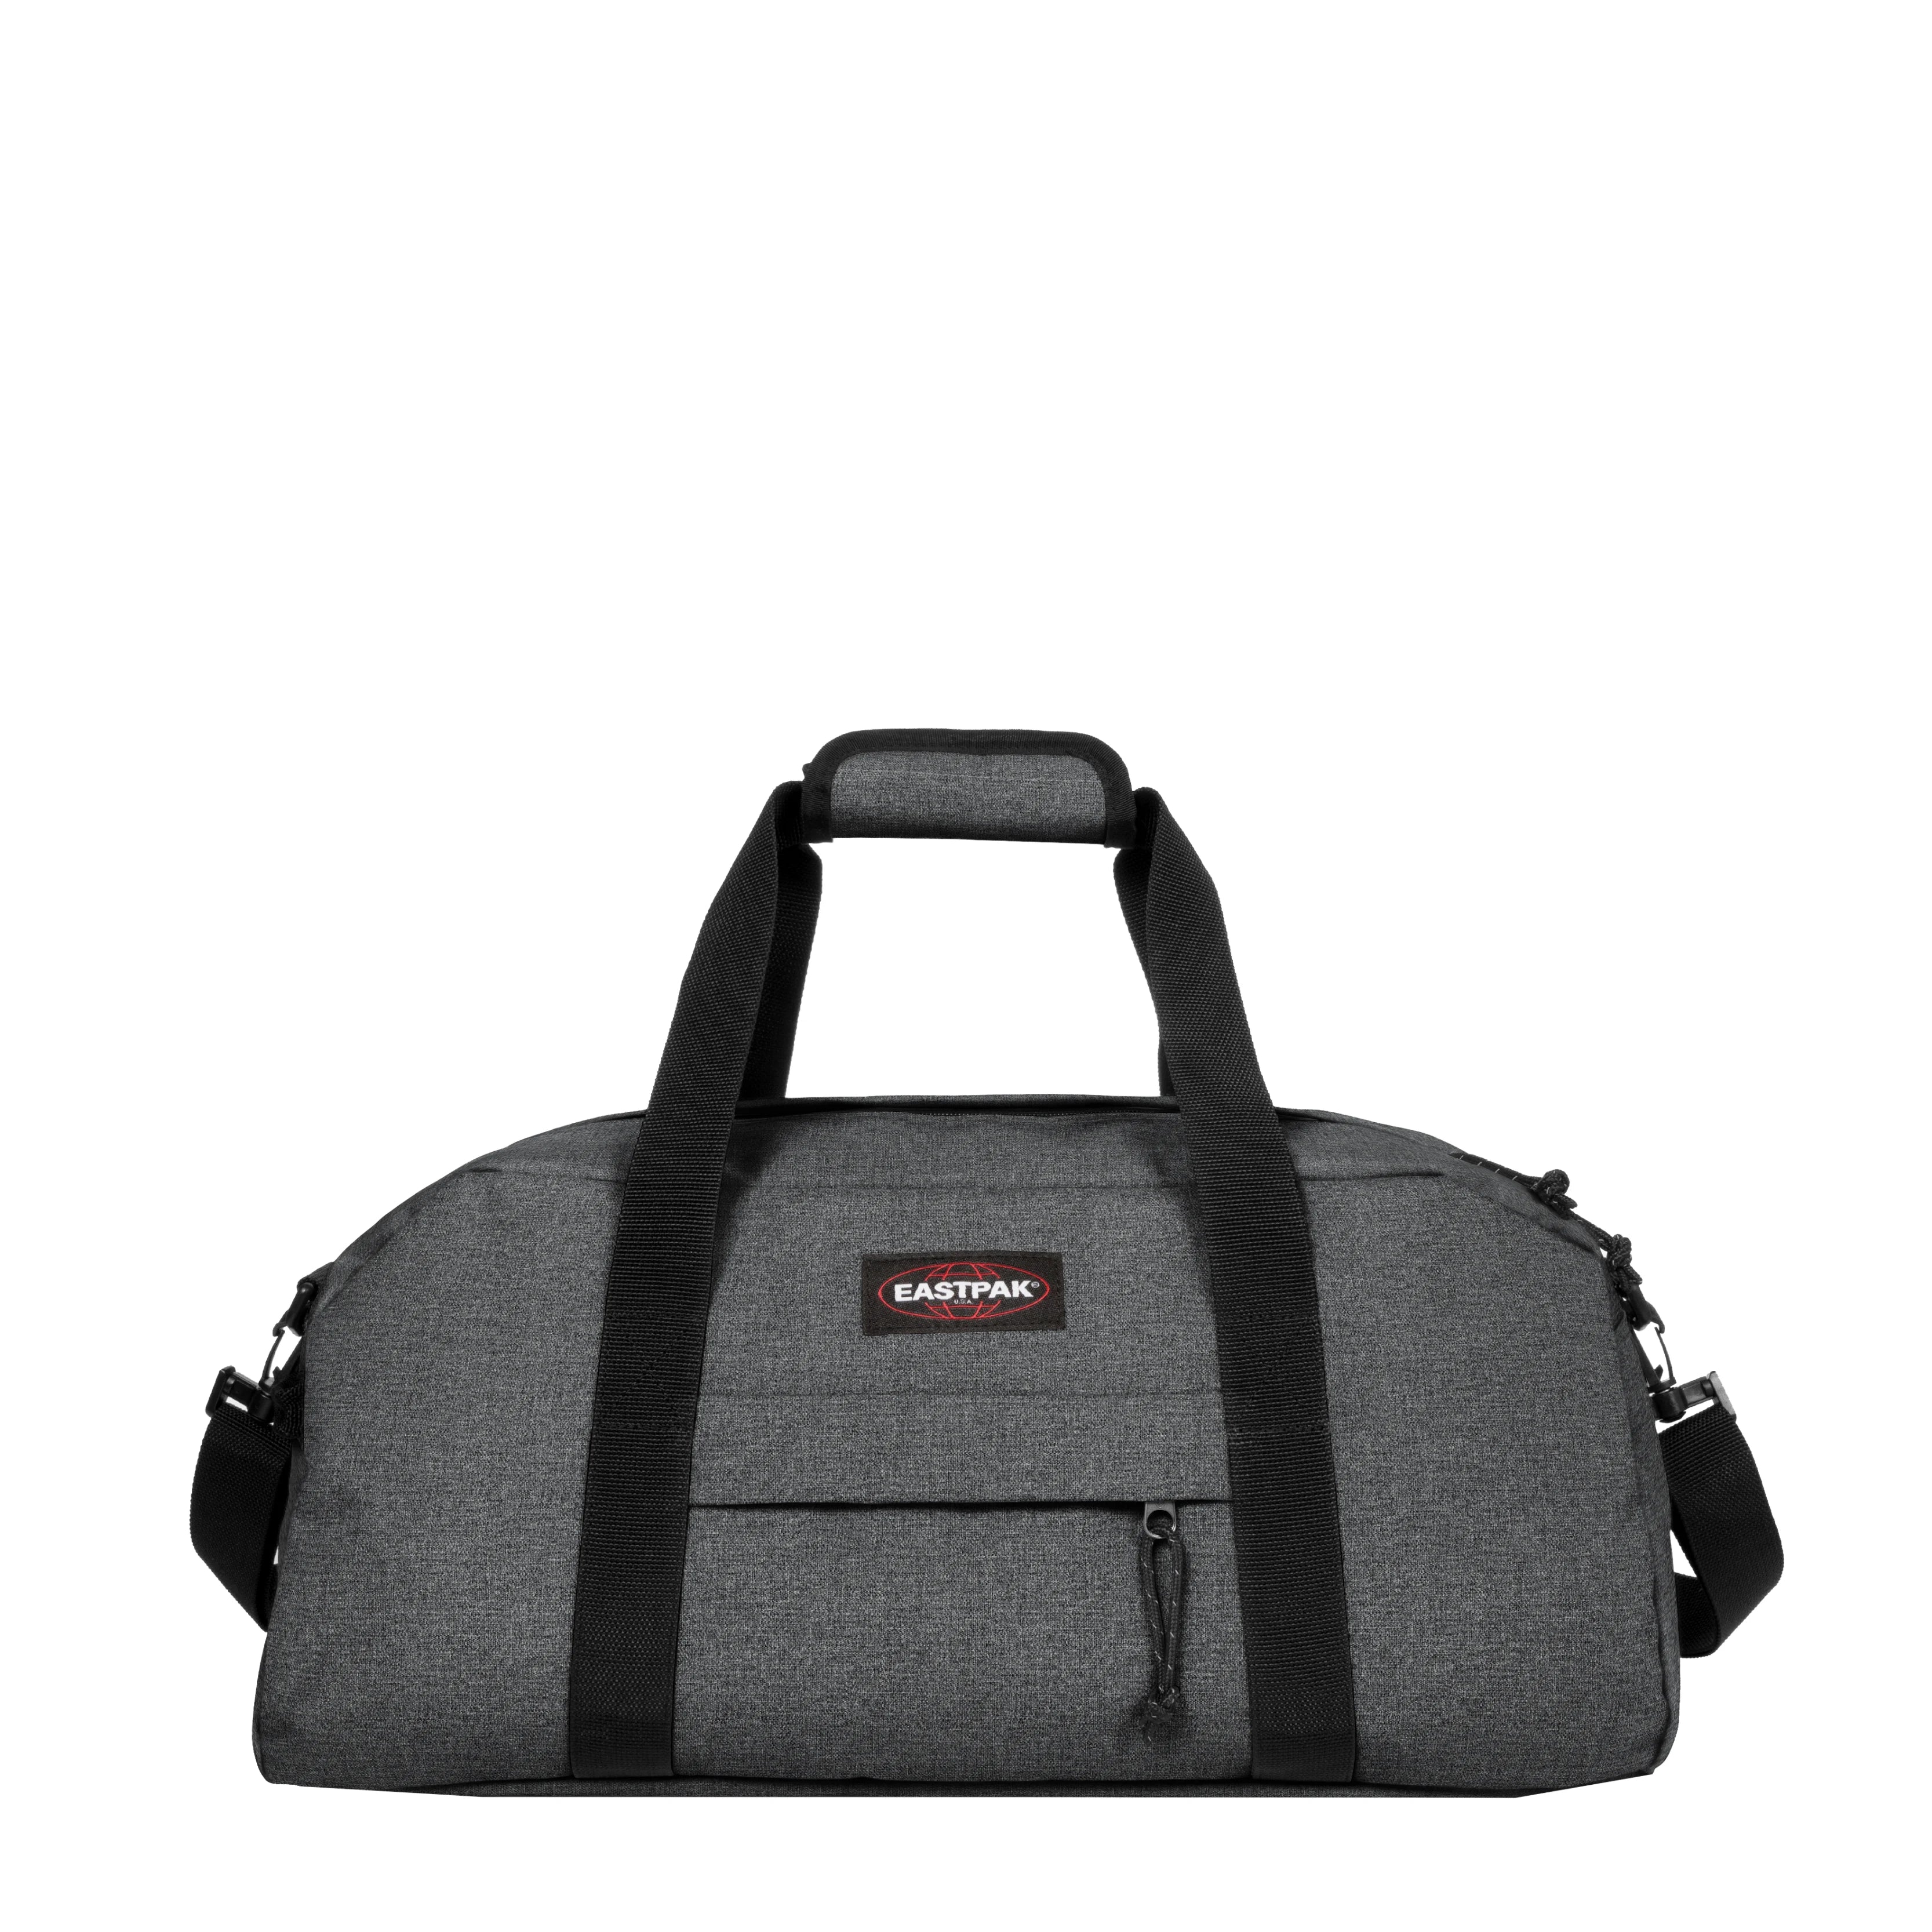 Eastpak Authentic Travel Stand Plus Travel Bag 53 cm - Black Denim